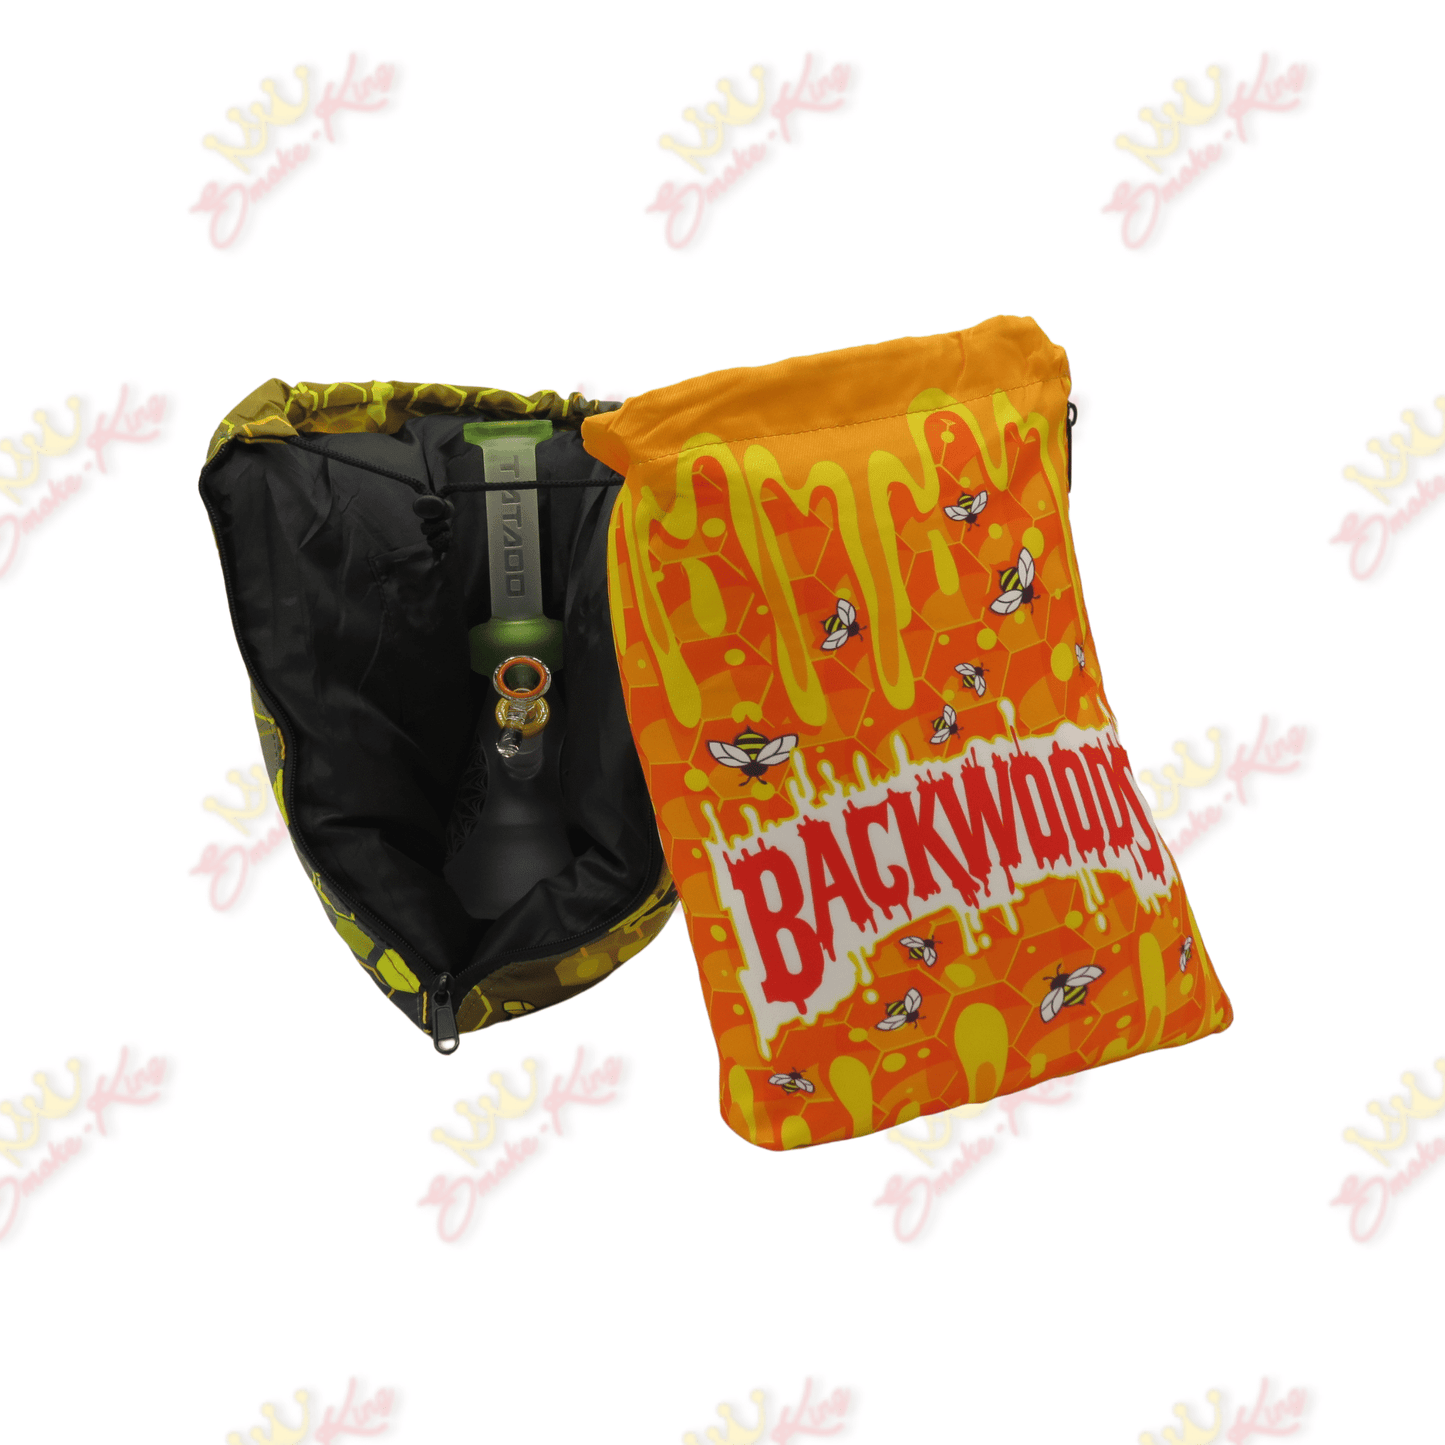 Orange Backwoods Travel Bong Bag